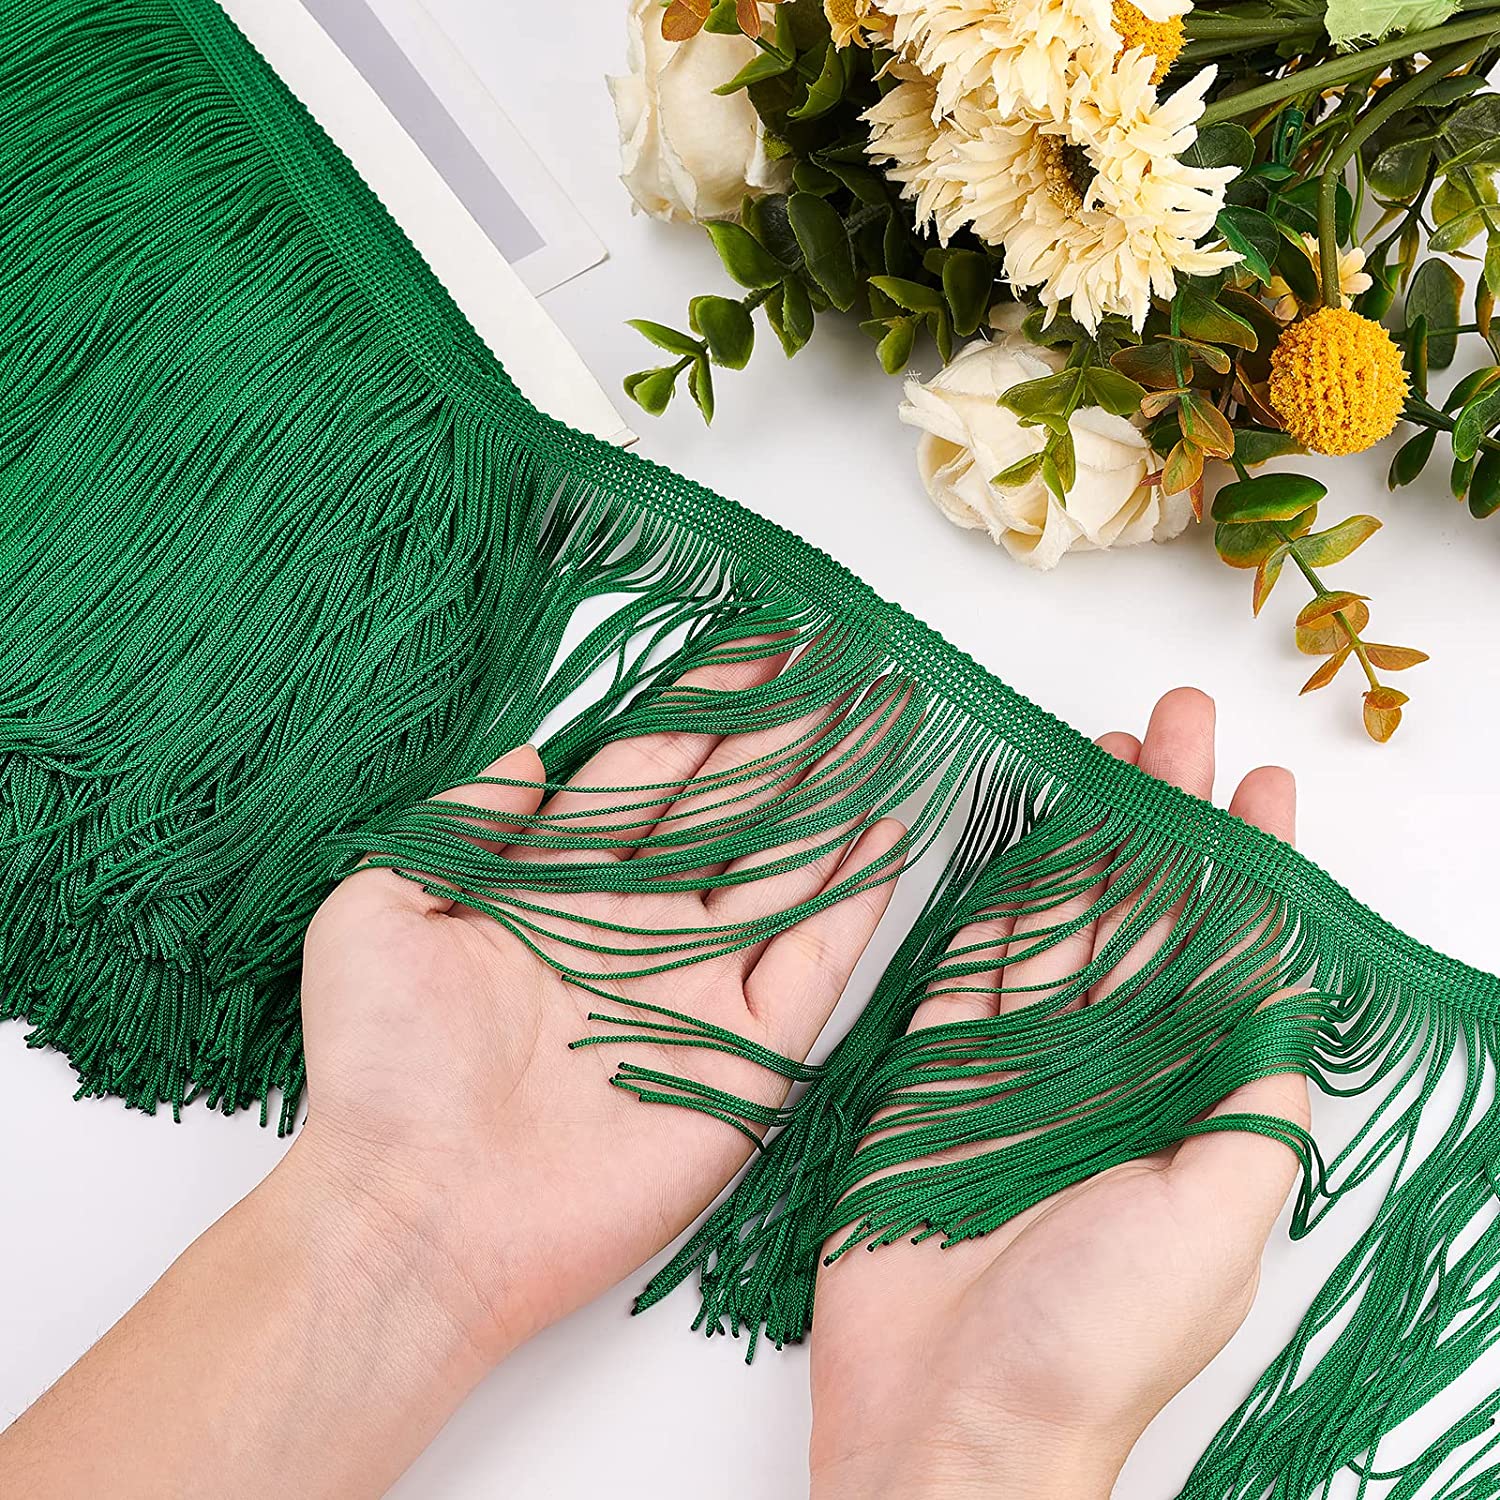 10m Sewing Fringe Trims Green Fringe Trim Lace Lamp Shade Decoration Trim for DIY Clothing Craft Latin Dress 155mm Wide